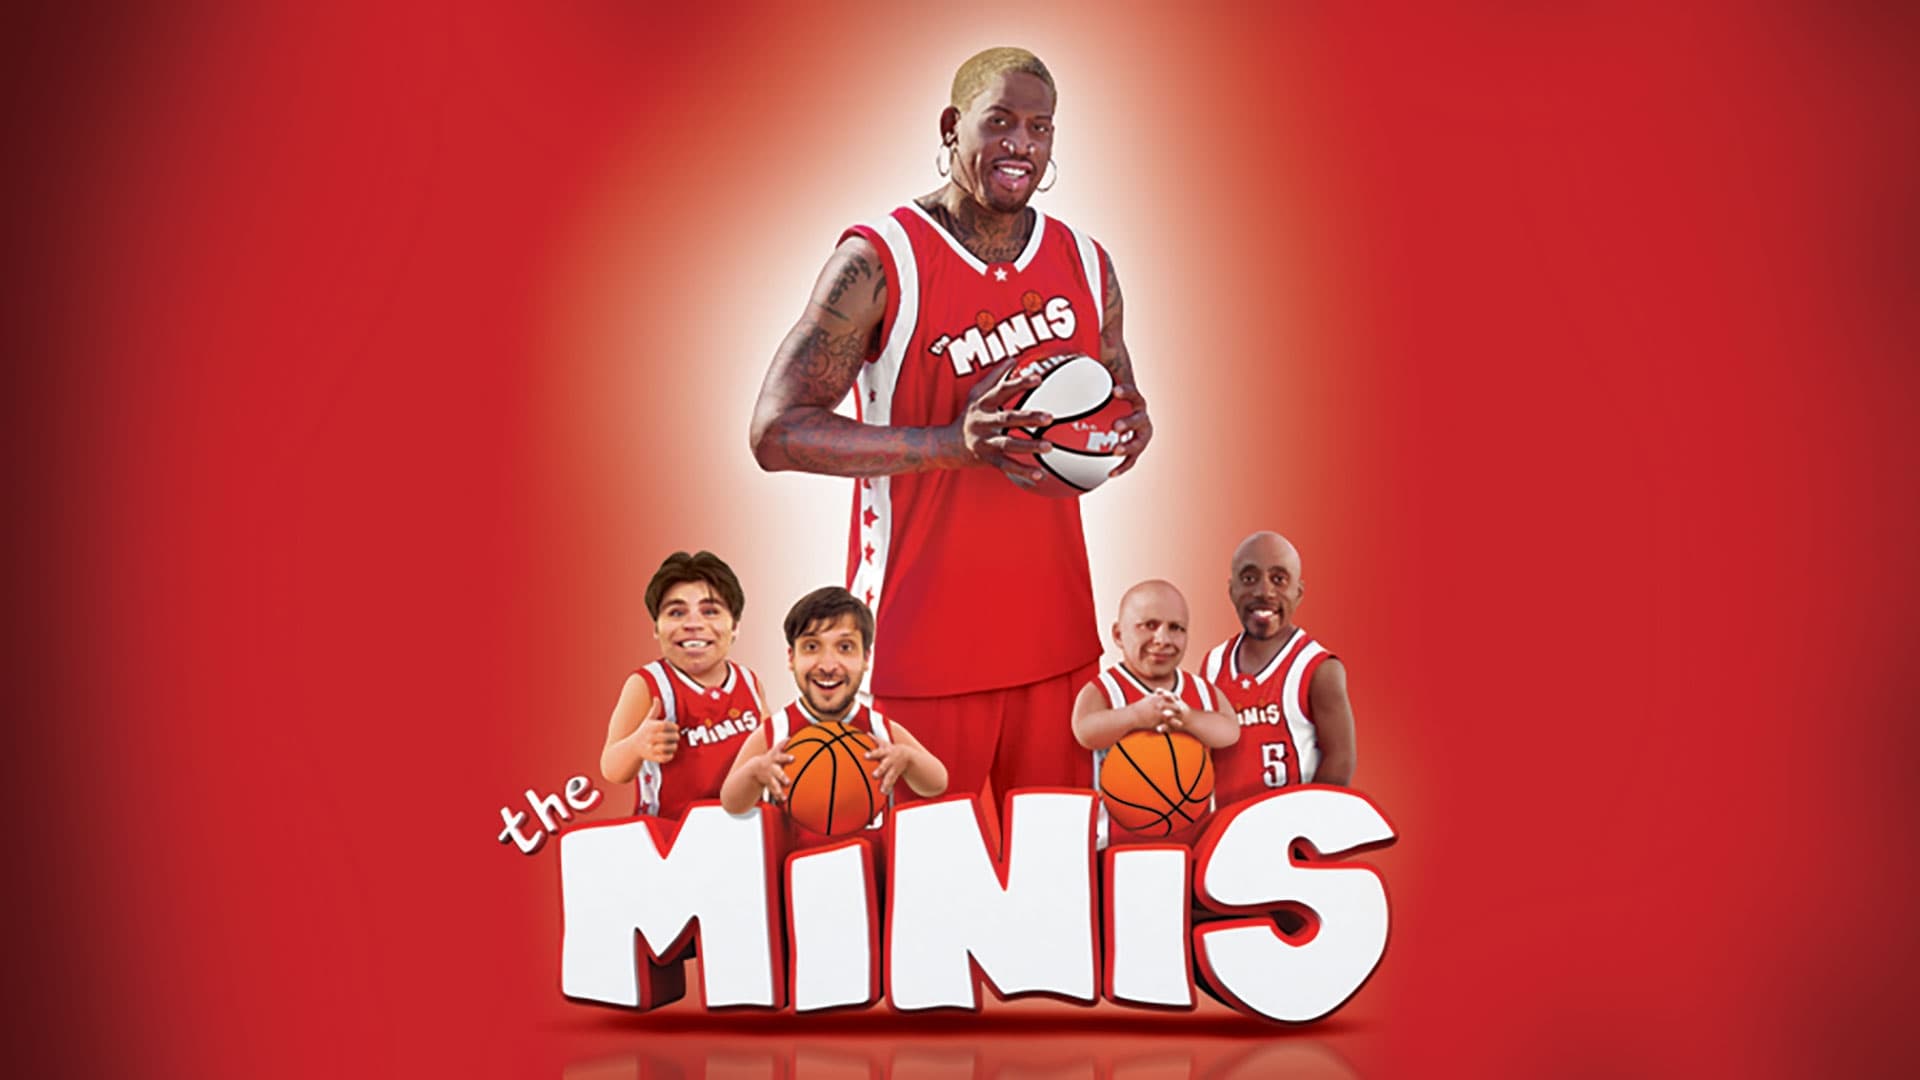 The Minis (2009)